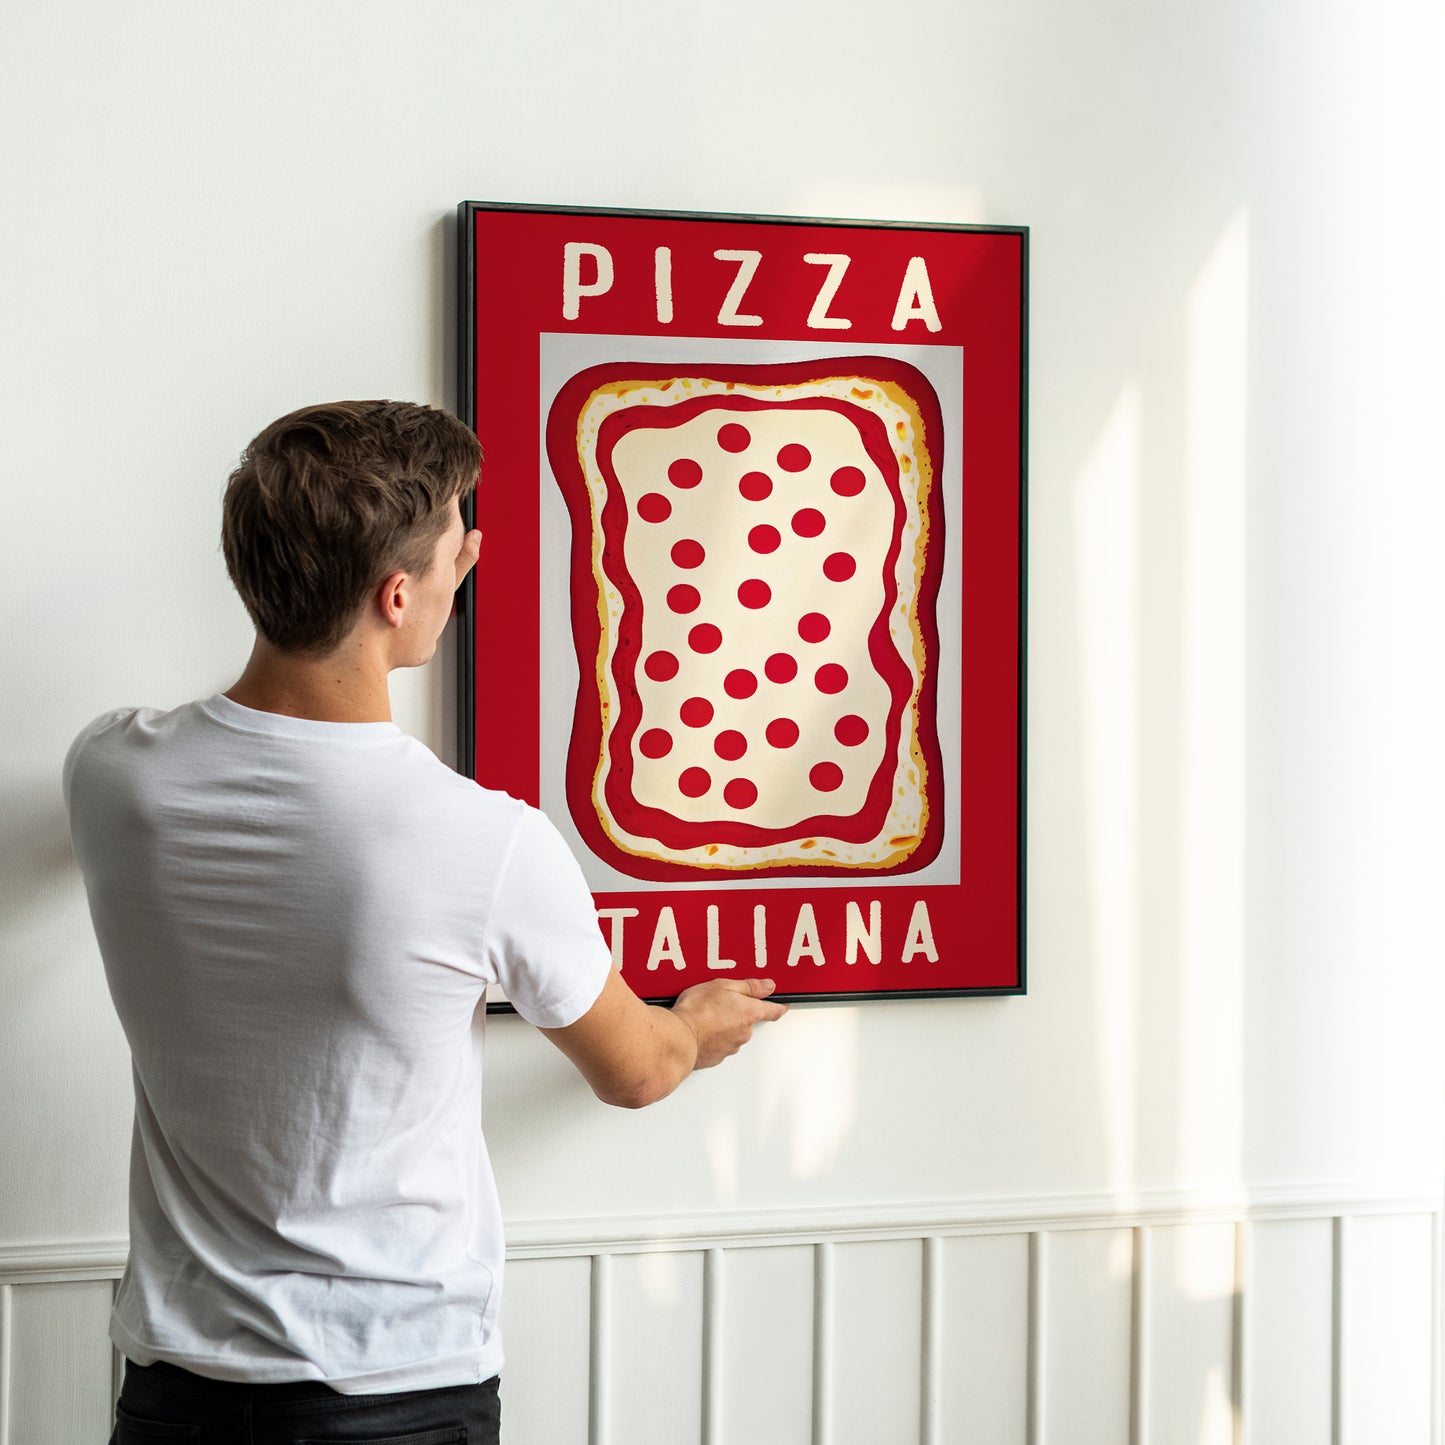 Pizza Italiana Red Poster